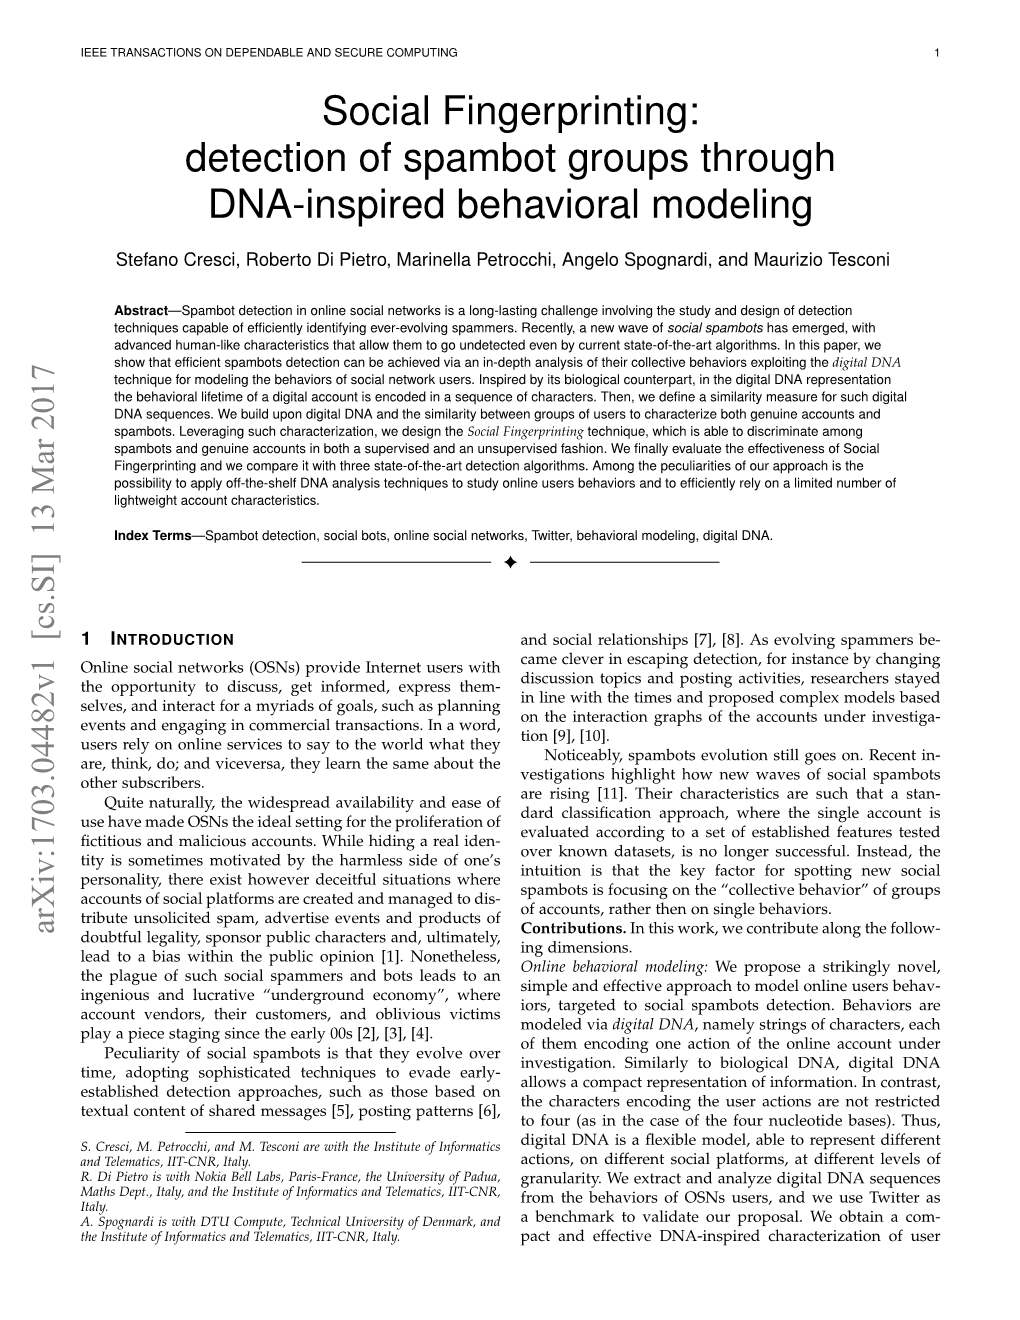 Social Fingerprinting: Detection of Spambot Groups Through DNA-Inspired Behavioral Modeling